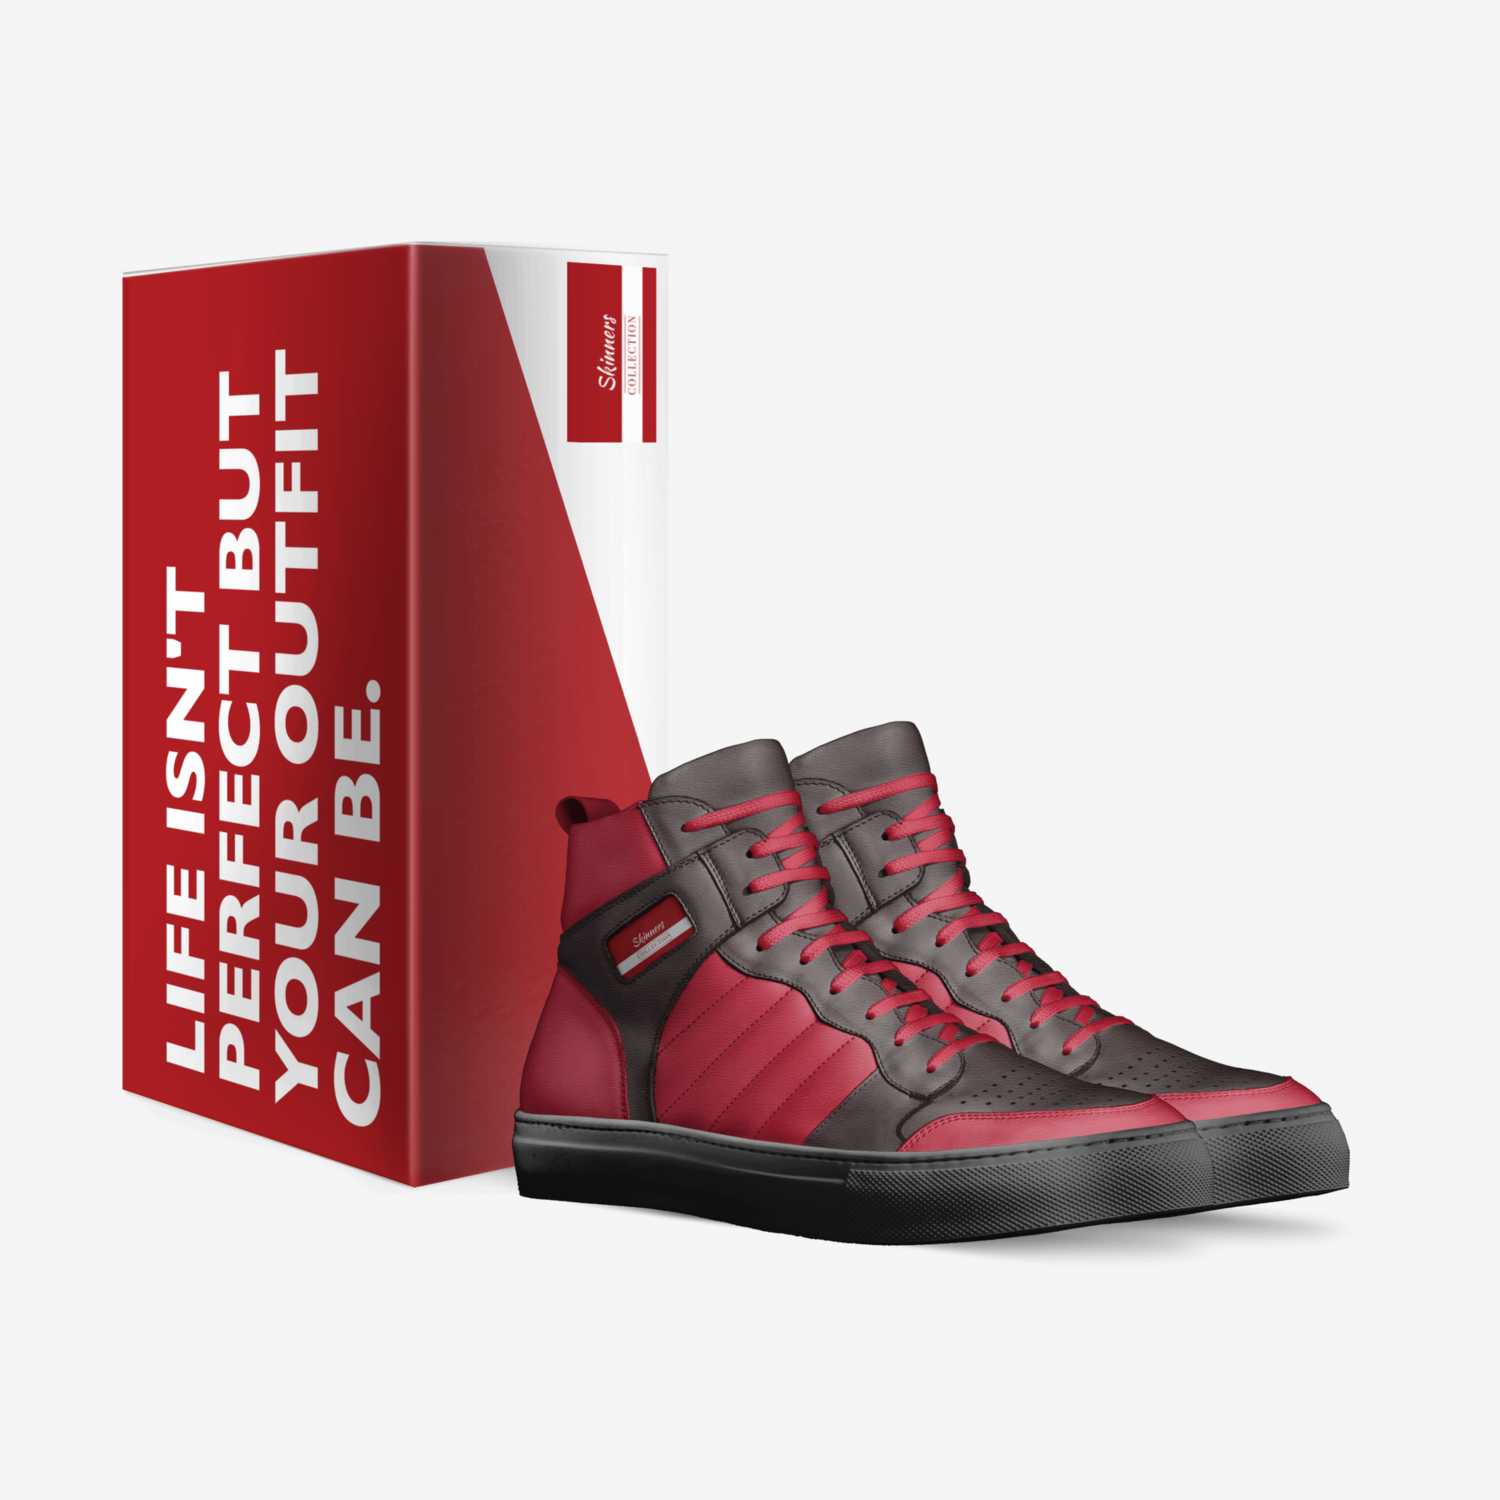 Skinners custom made in Italy shoes by Locke Skinner | Box view